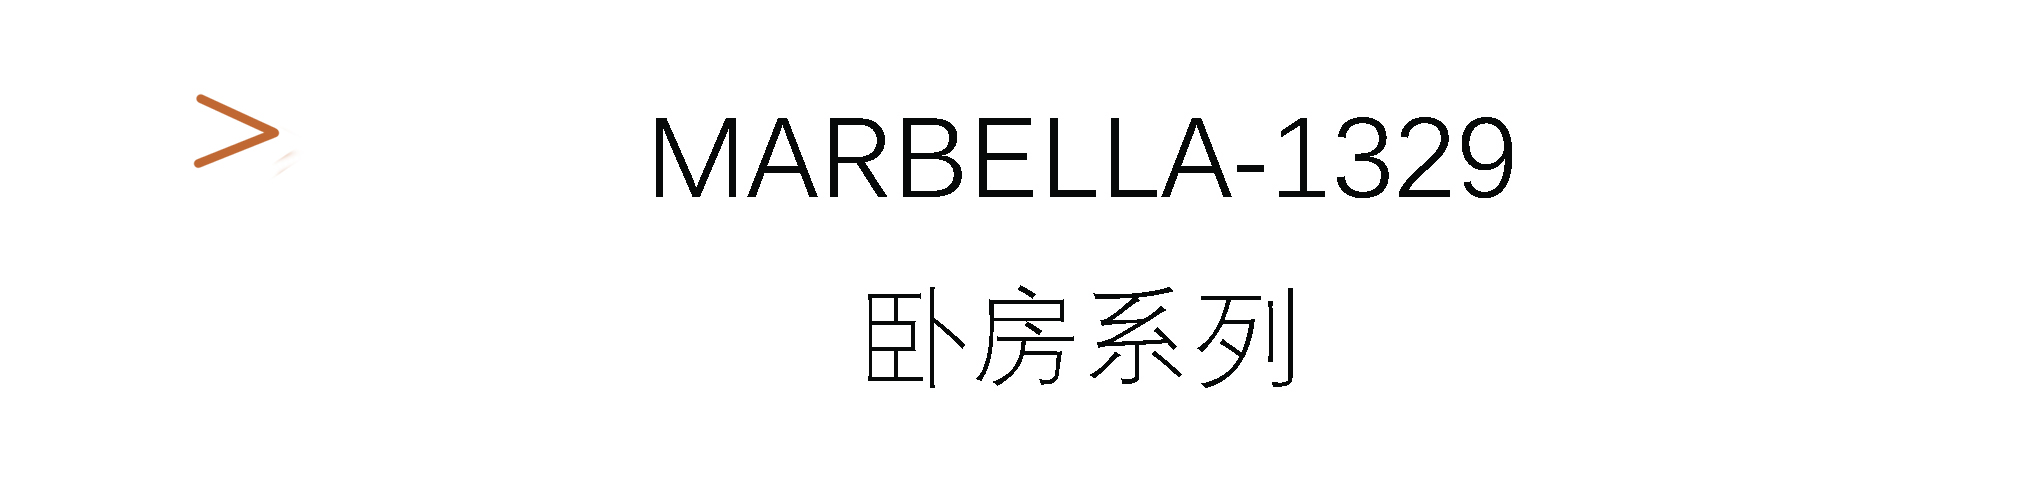 Marbella-1329